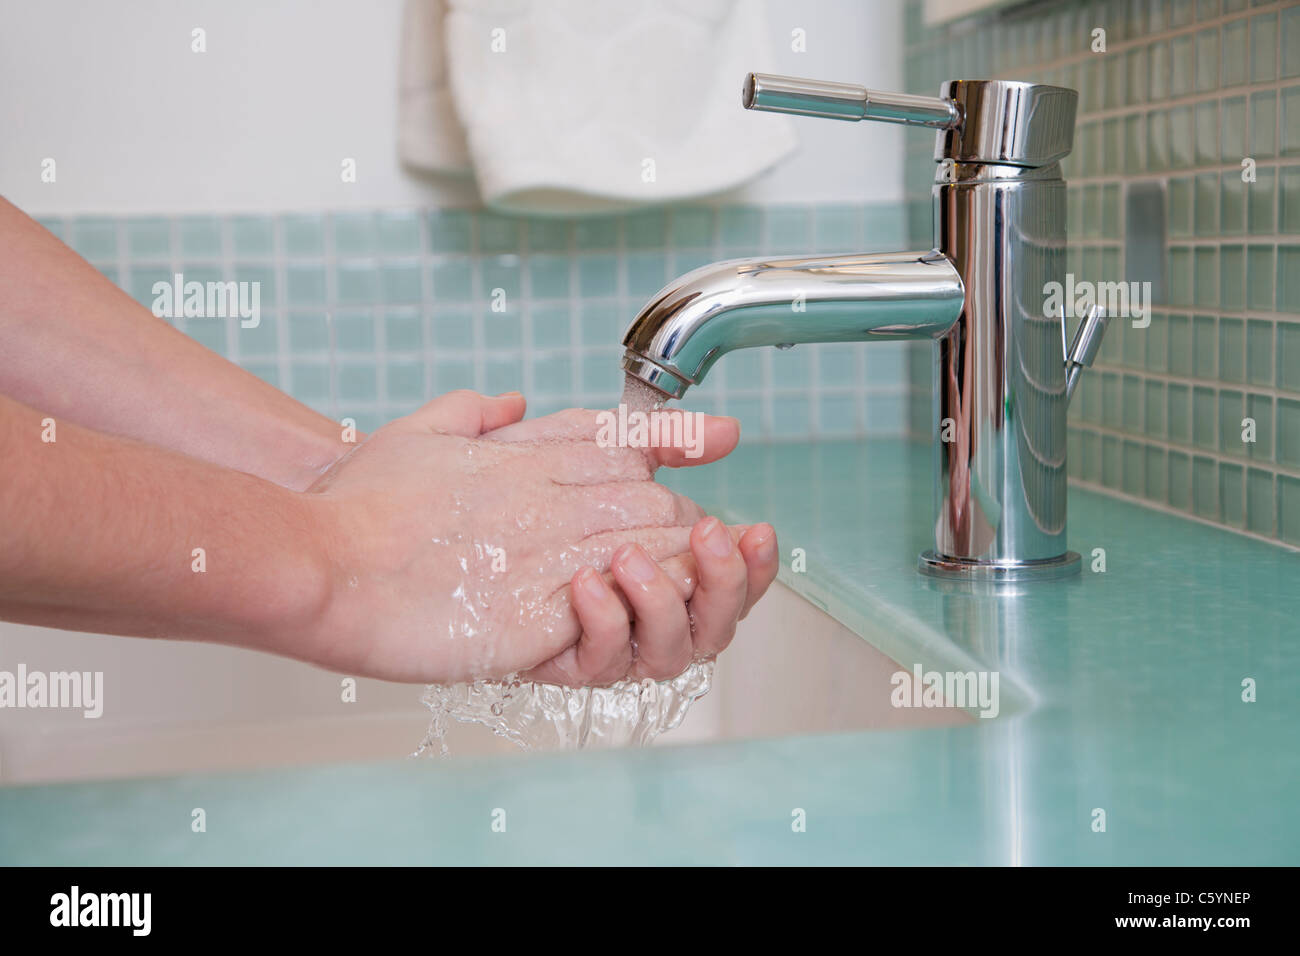 USA, Illinois, Metamora, close up of washing hands Stock Photo